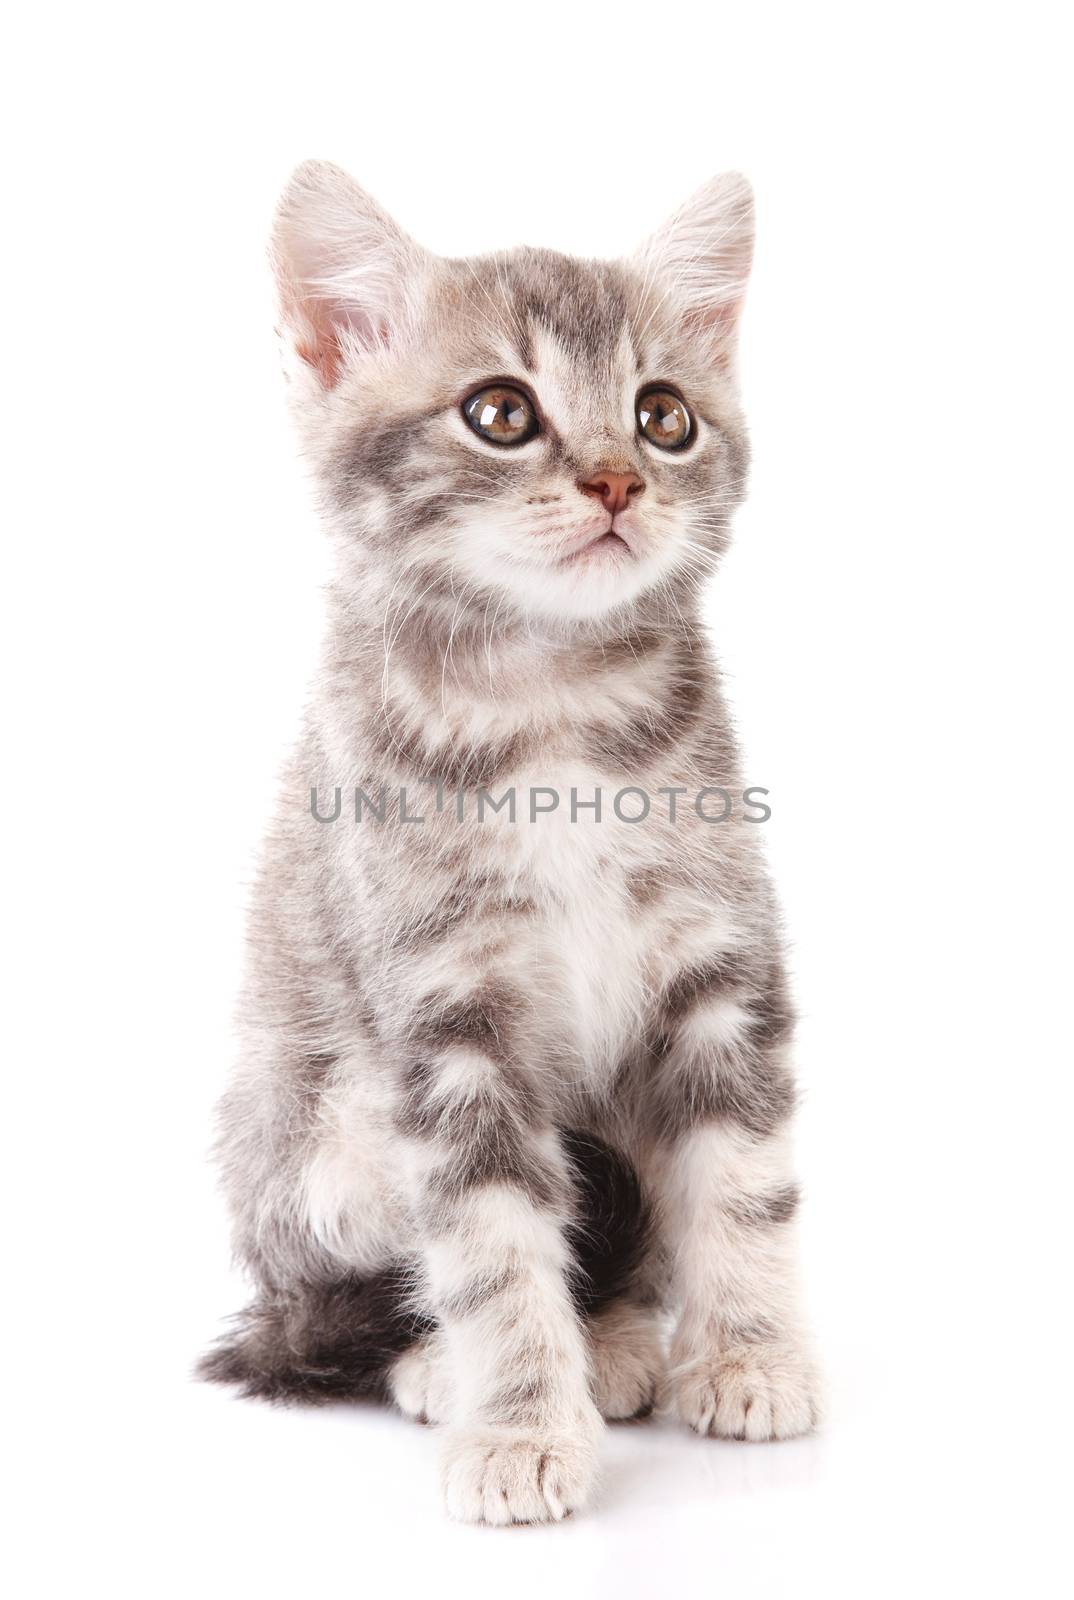 
gray funny kitten sitting on white background